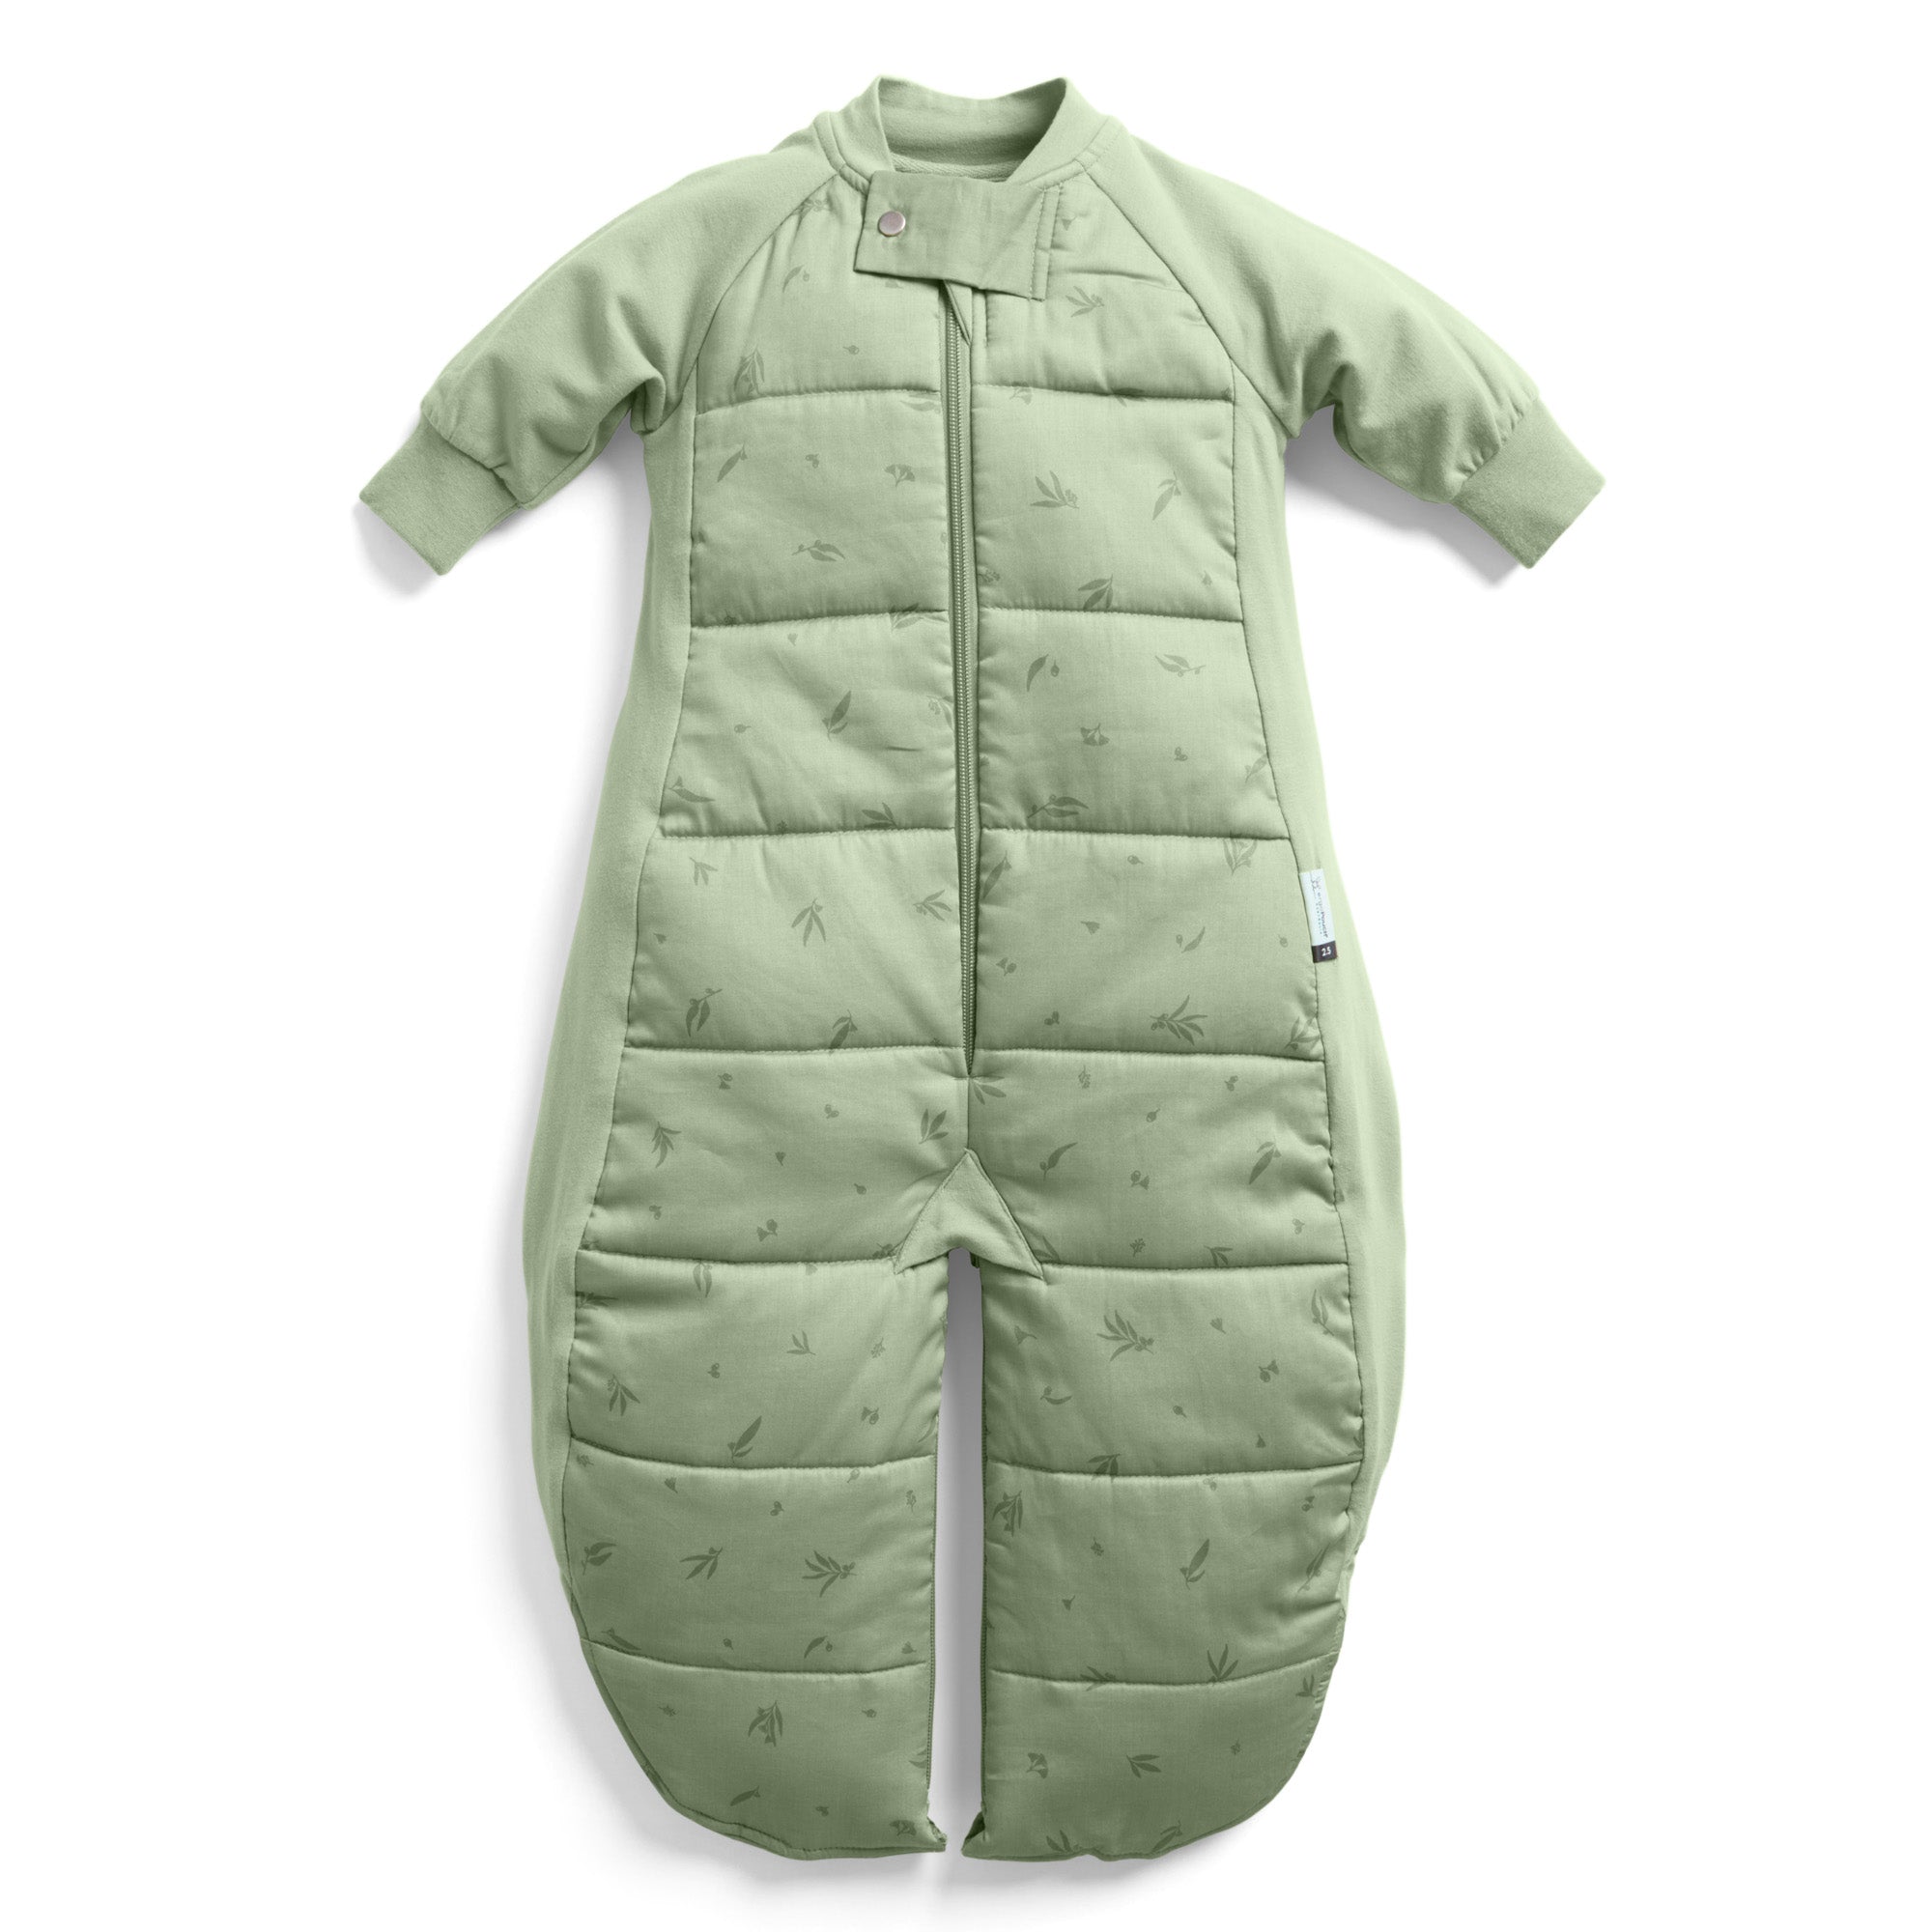 Sleep Suit Bag 3.5 tog (Willow)